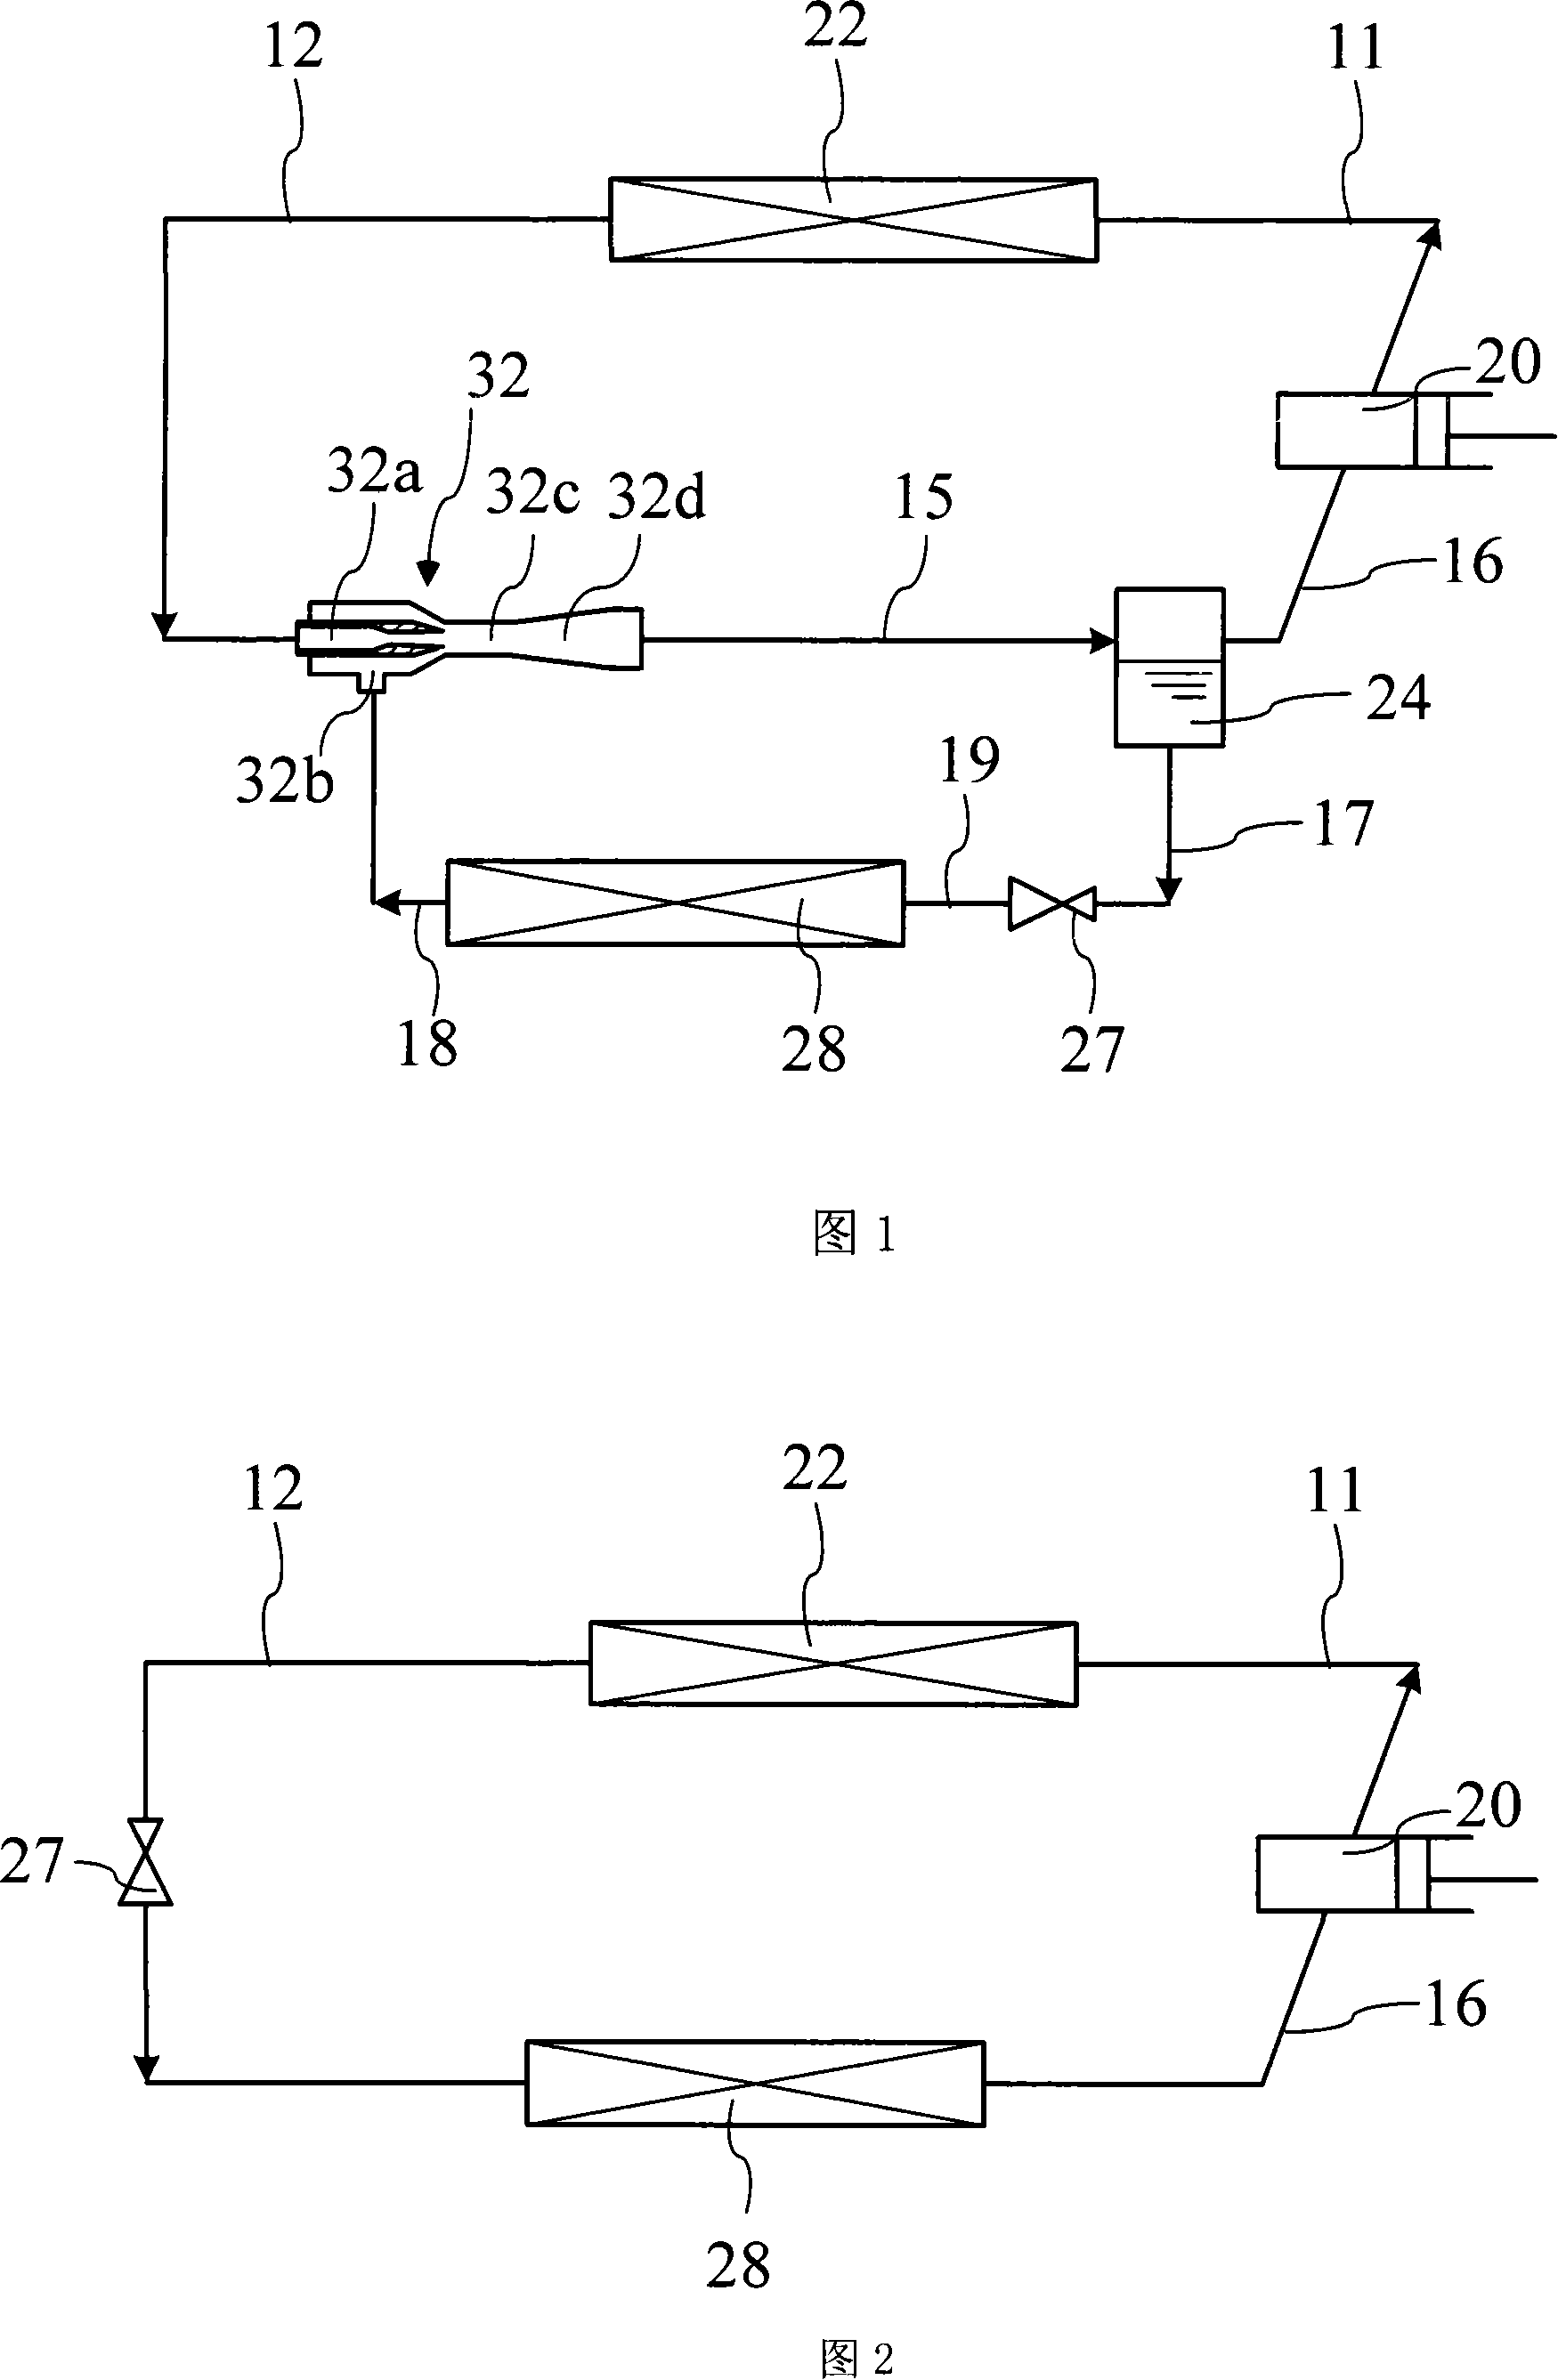 Vapour compressing refrigeration system including injector